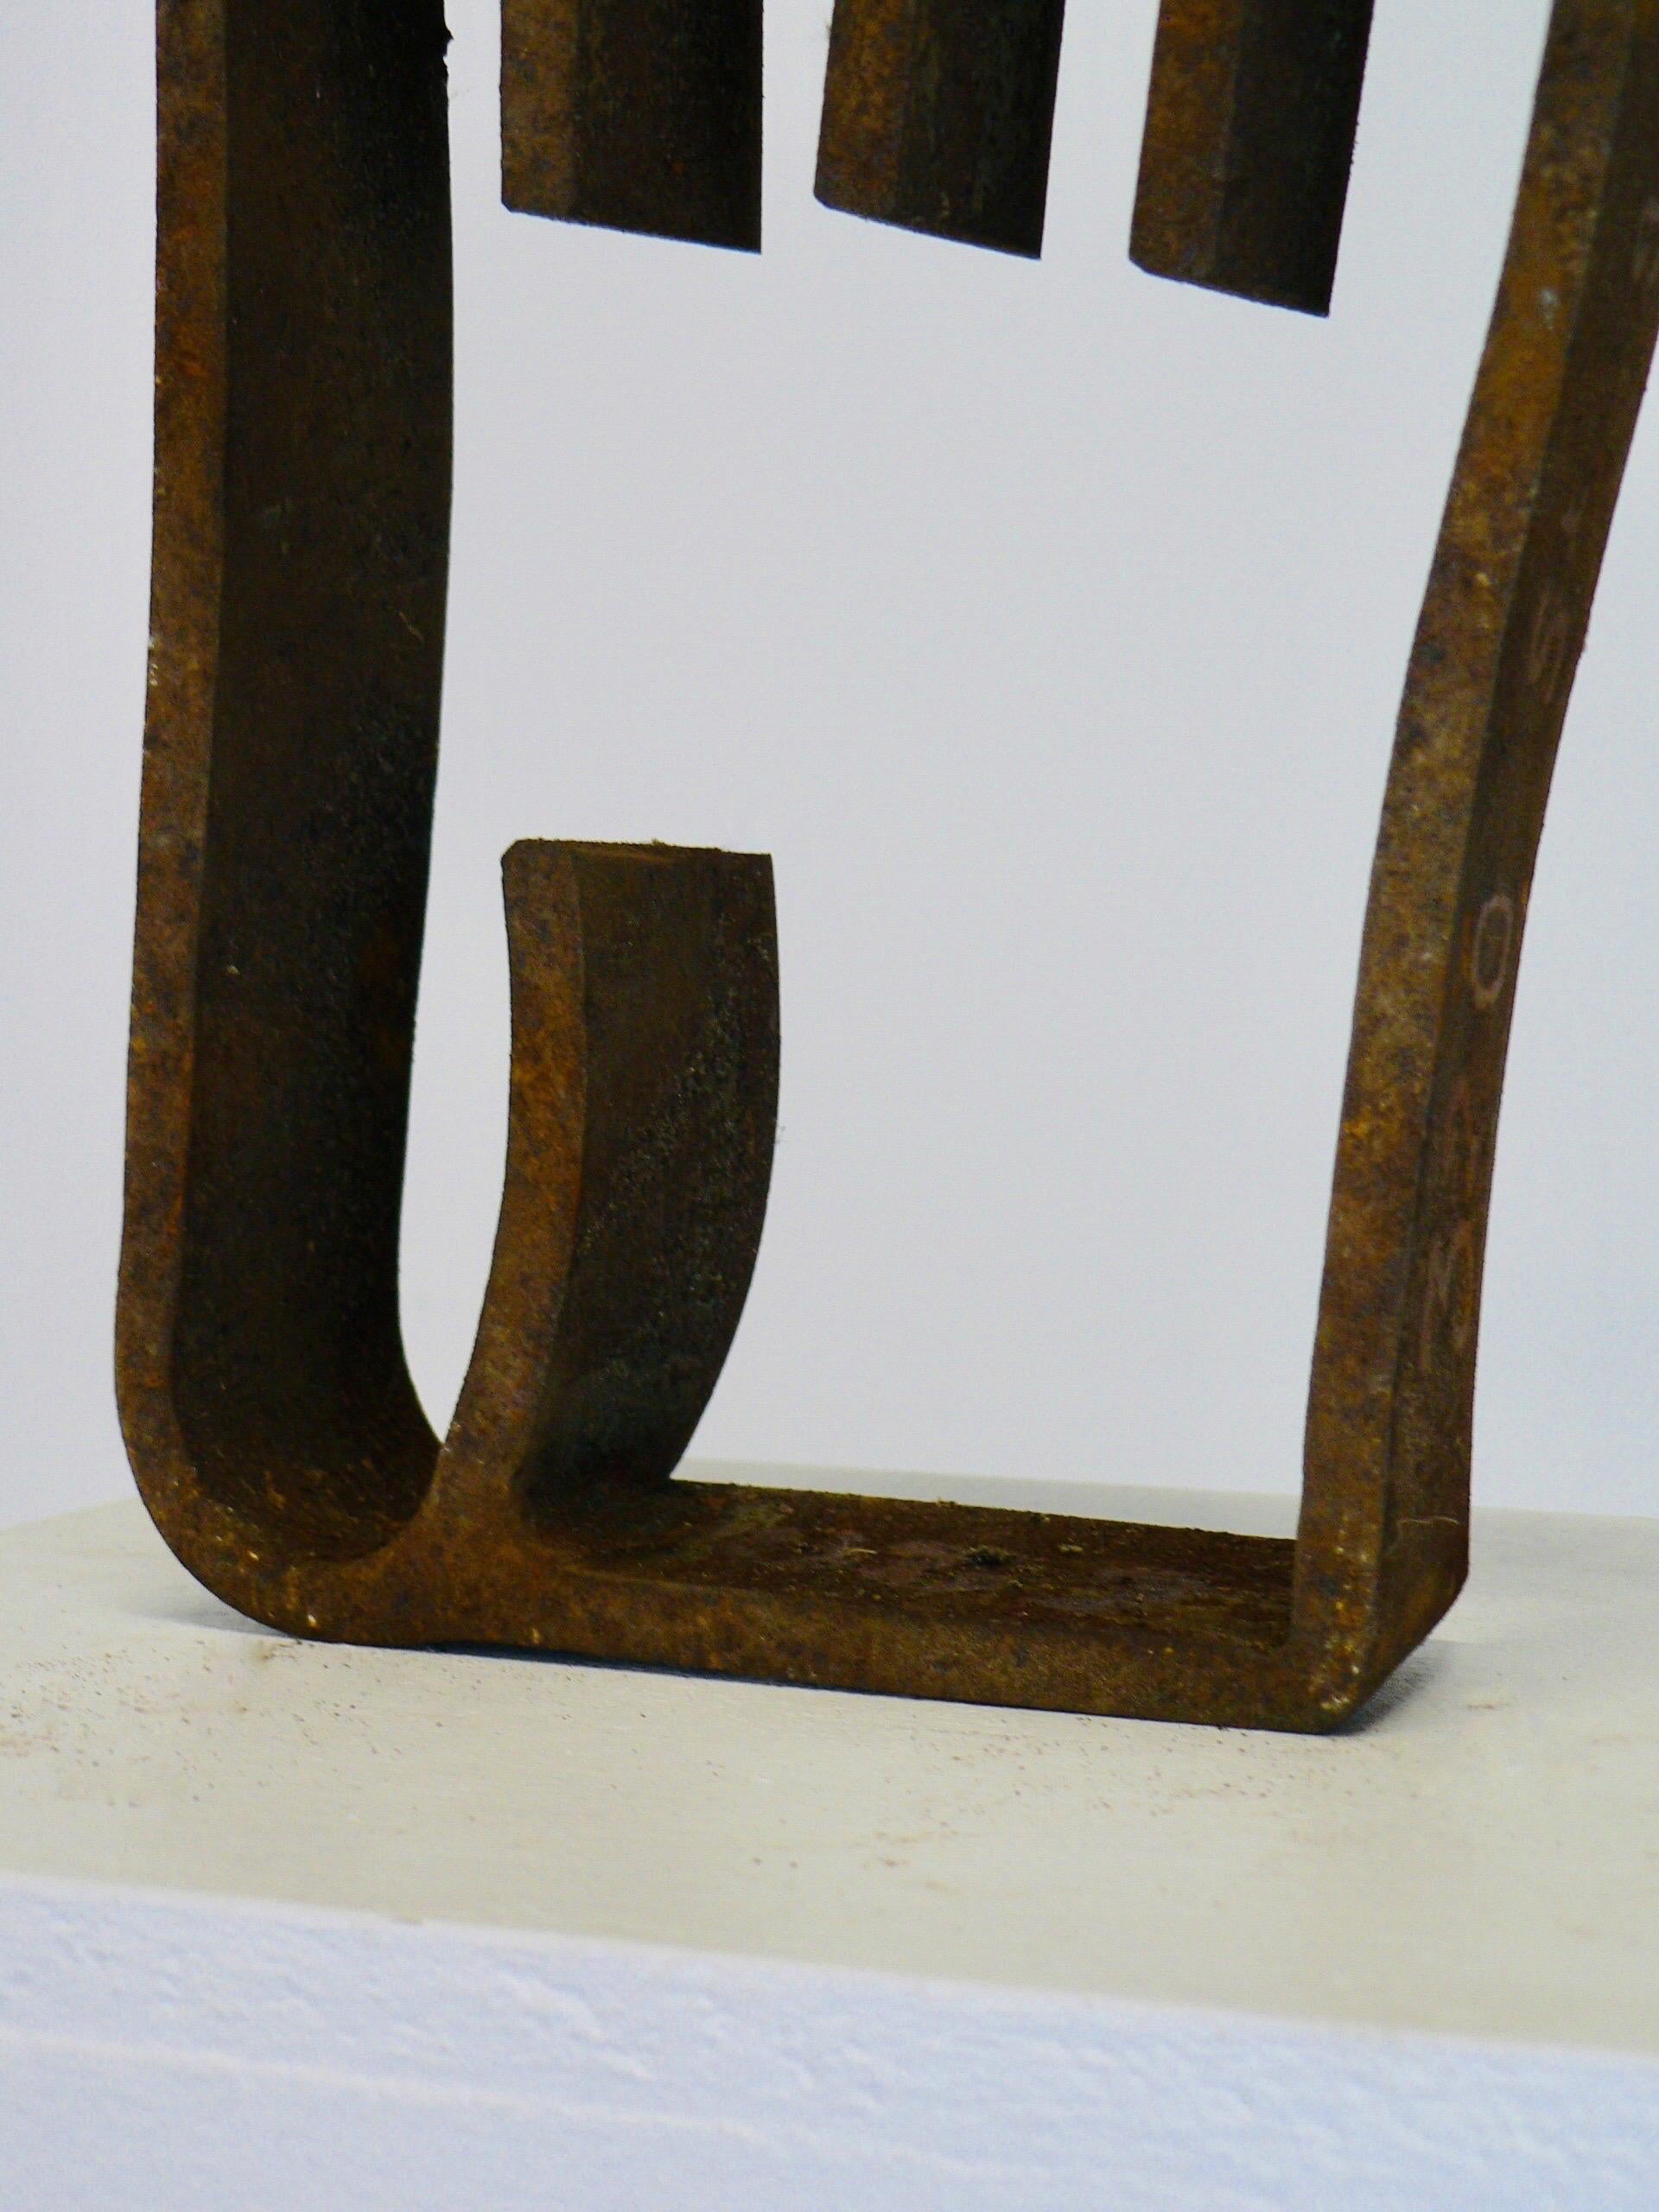 Italian Abstract corten steel sculpture - 1970s - France. For Sale